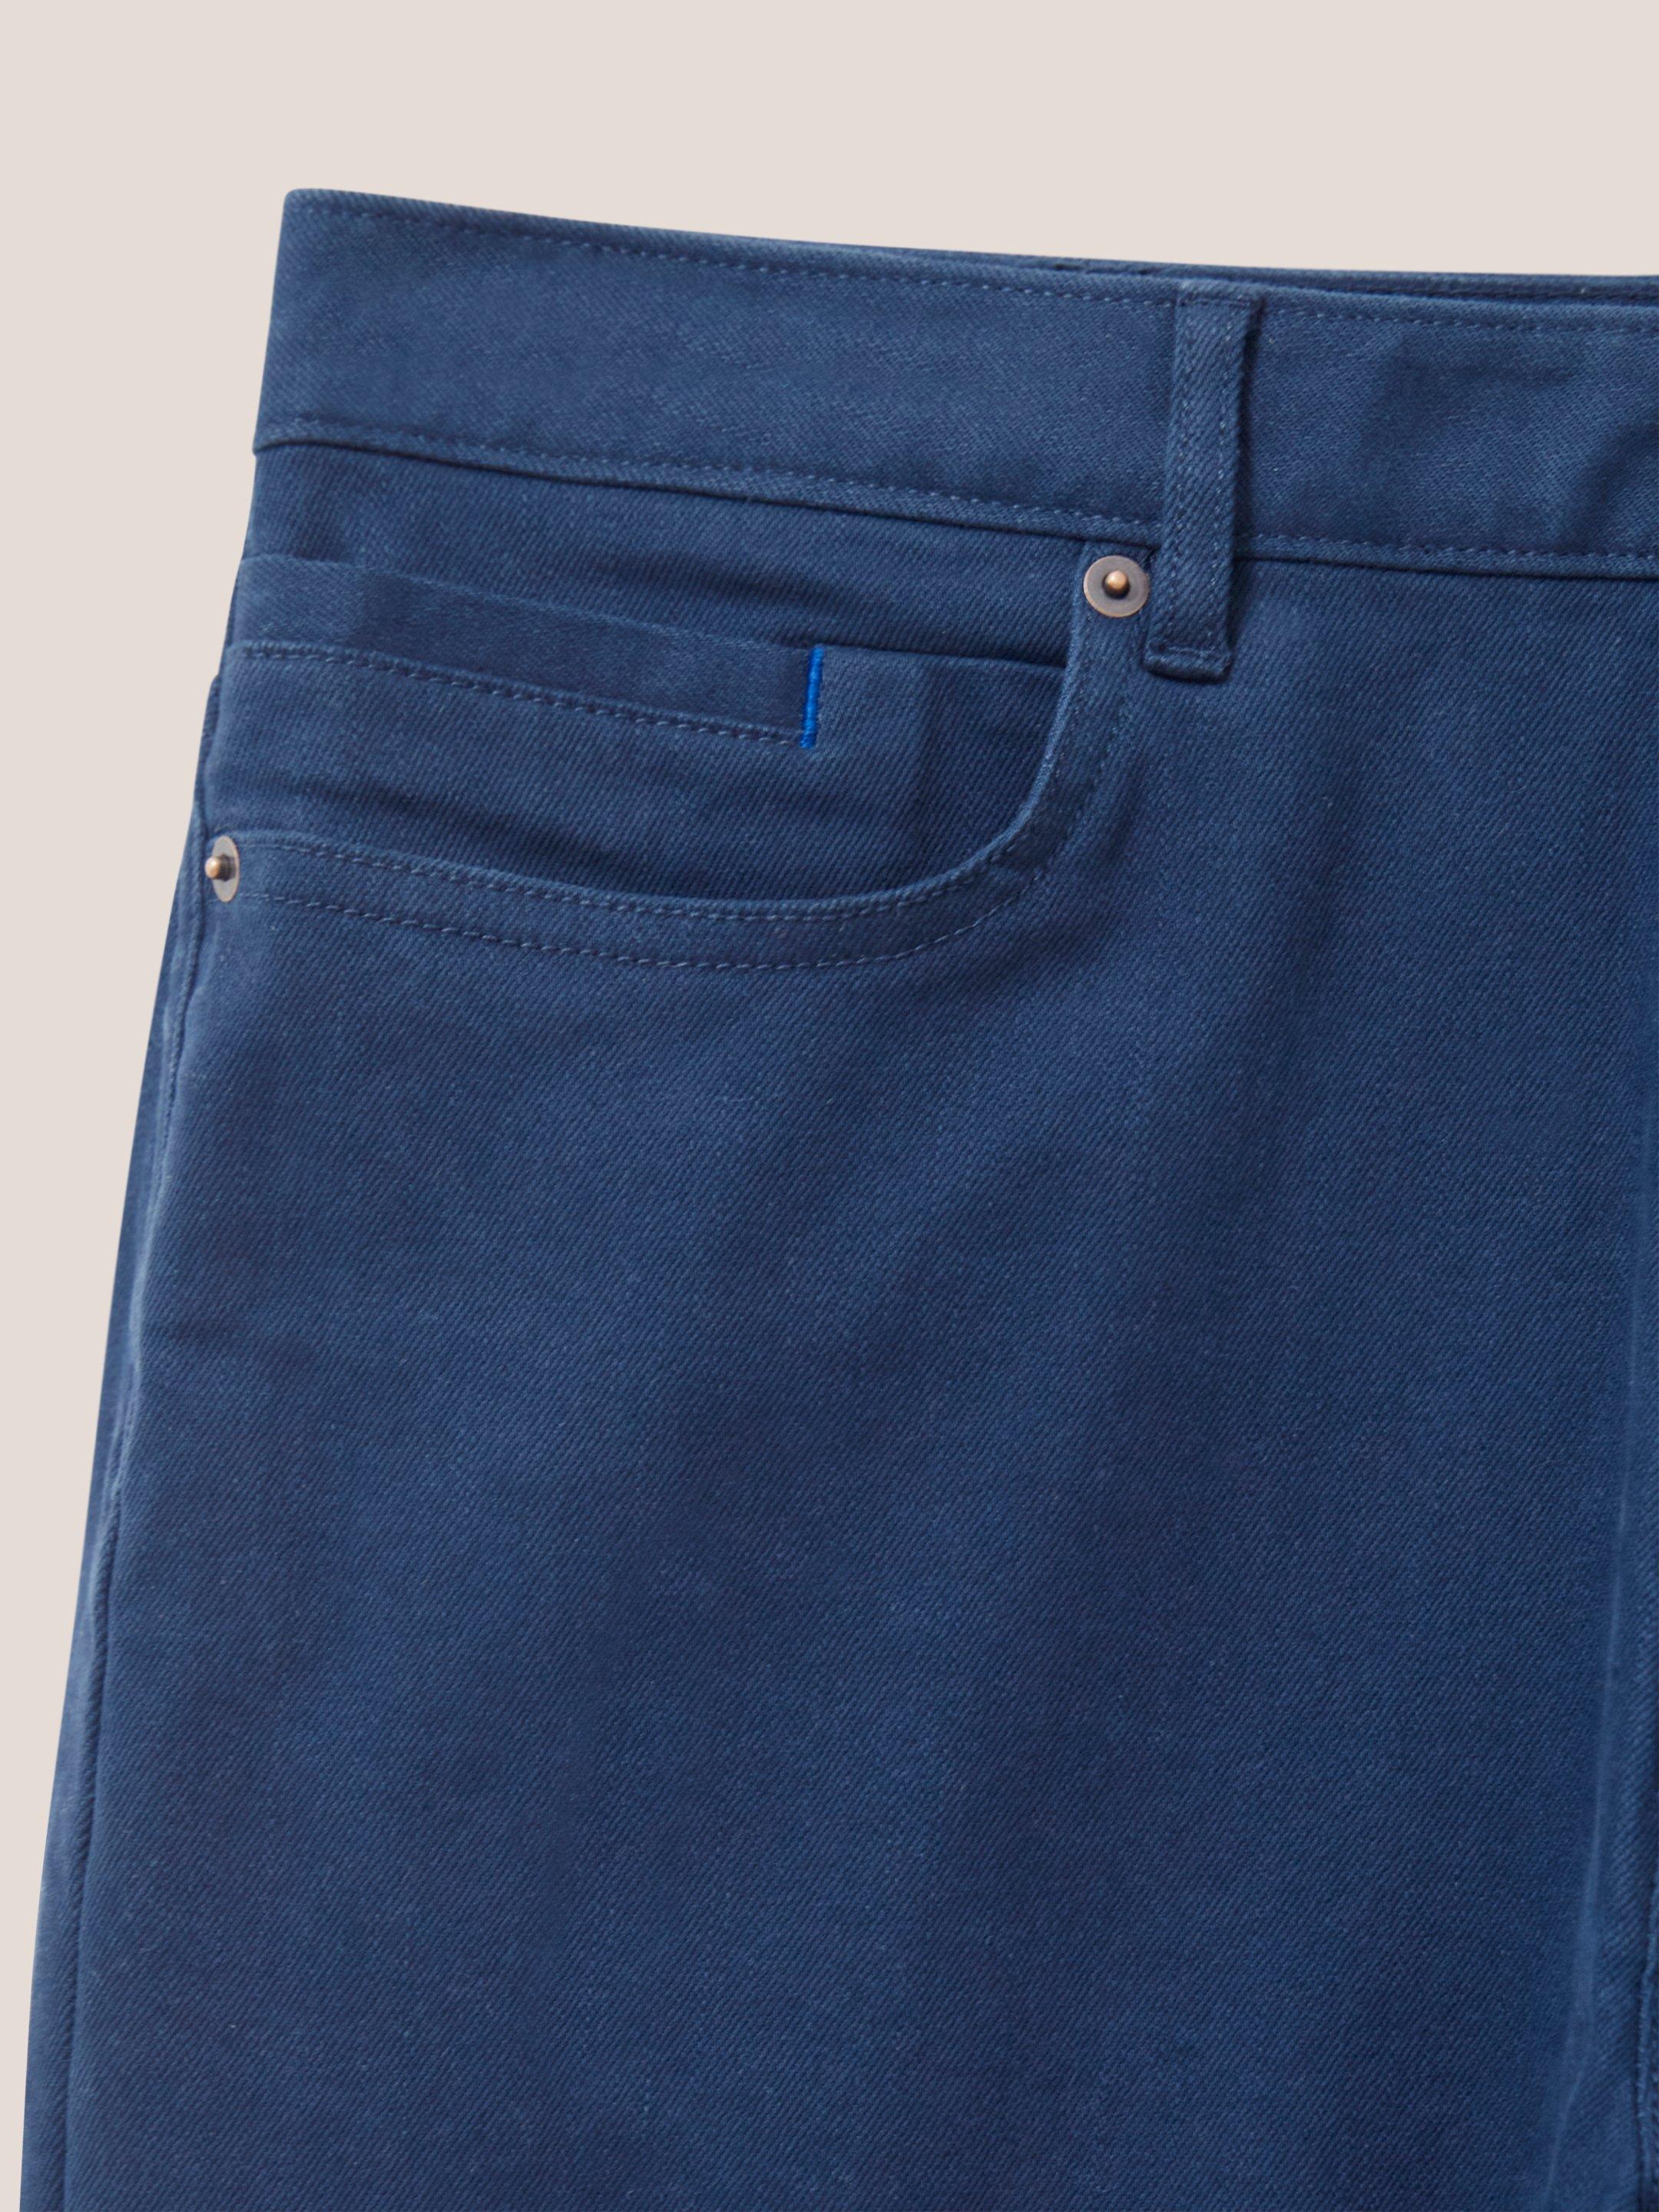 Kirby Twill 5 Pocket Trouser in DARK NAVY - FLAT DETAIL